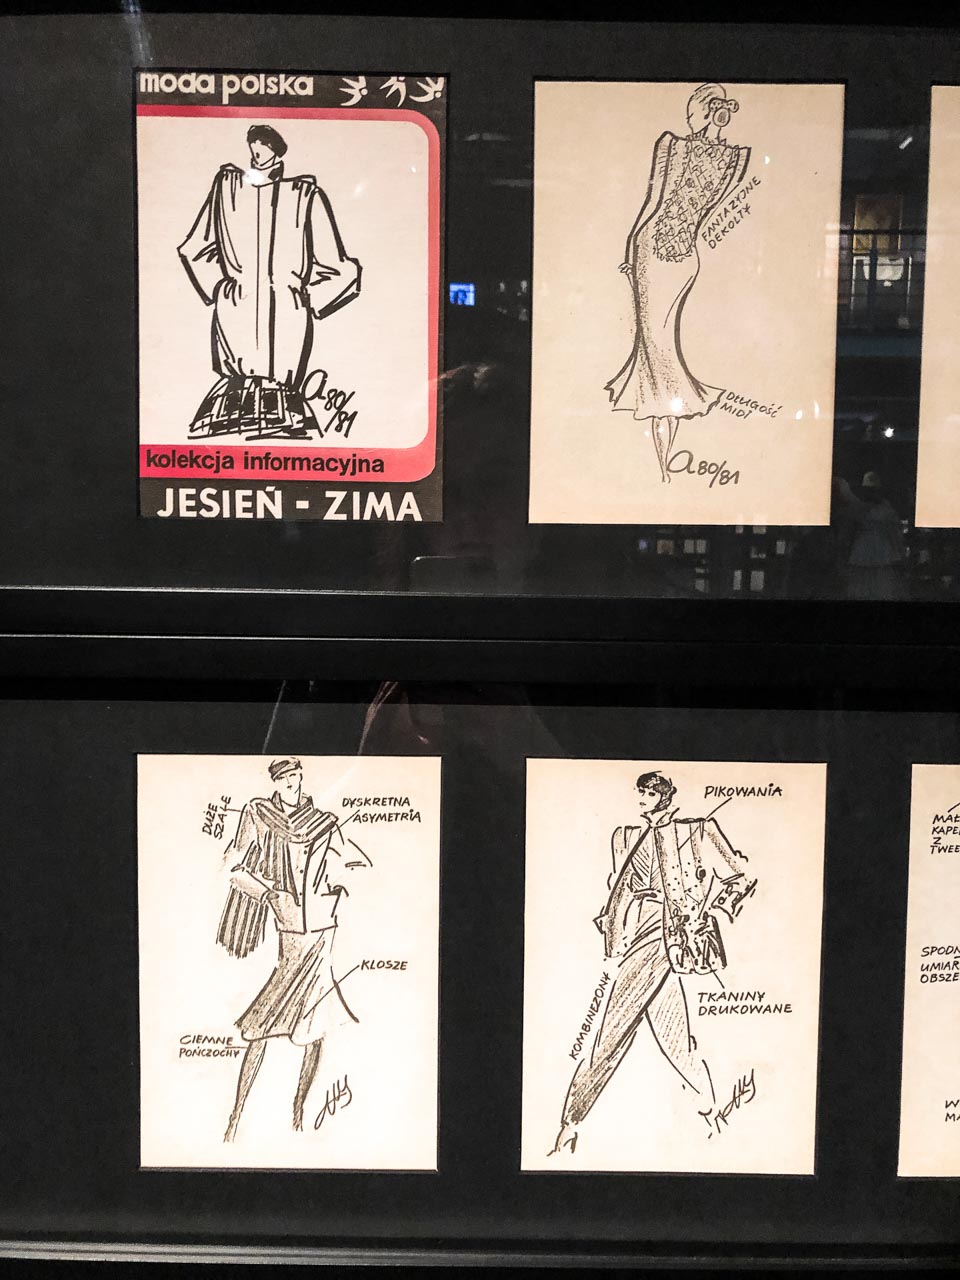 Fashion sketches of Moda Polska at The Central Museum of Textiles in Łódź, Poland